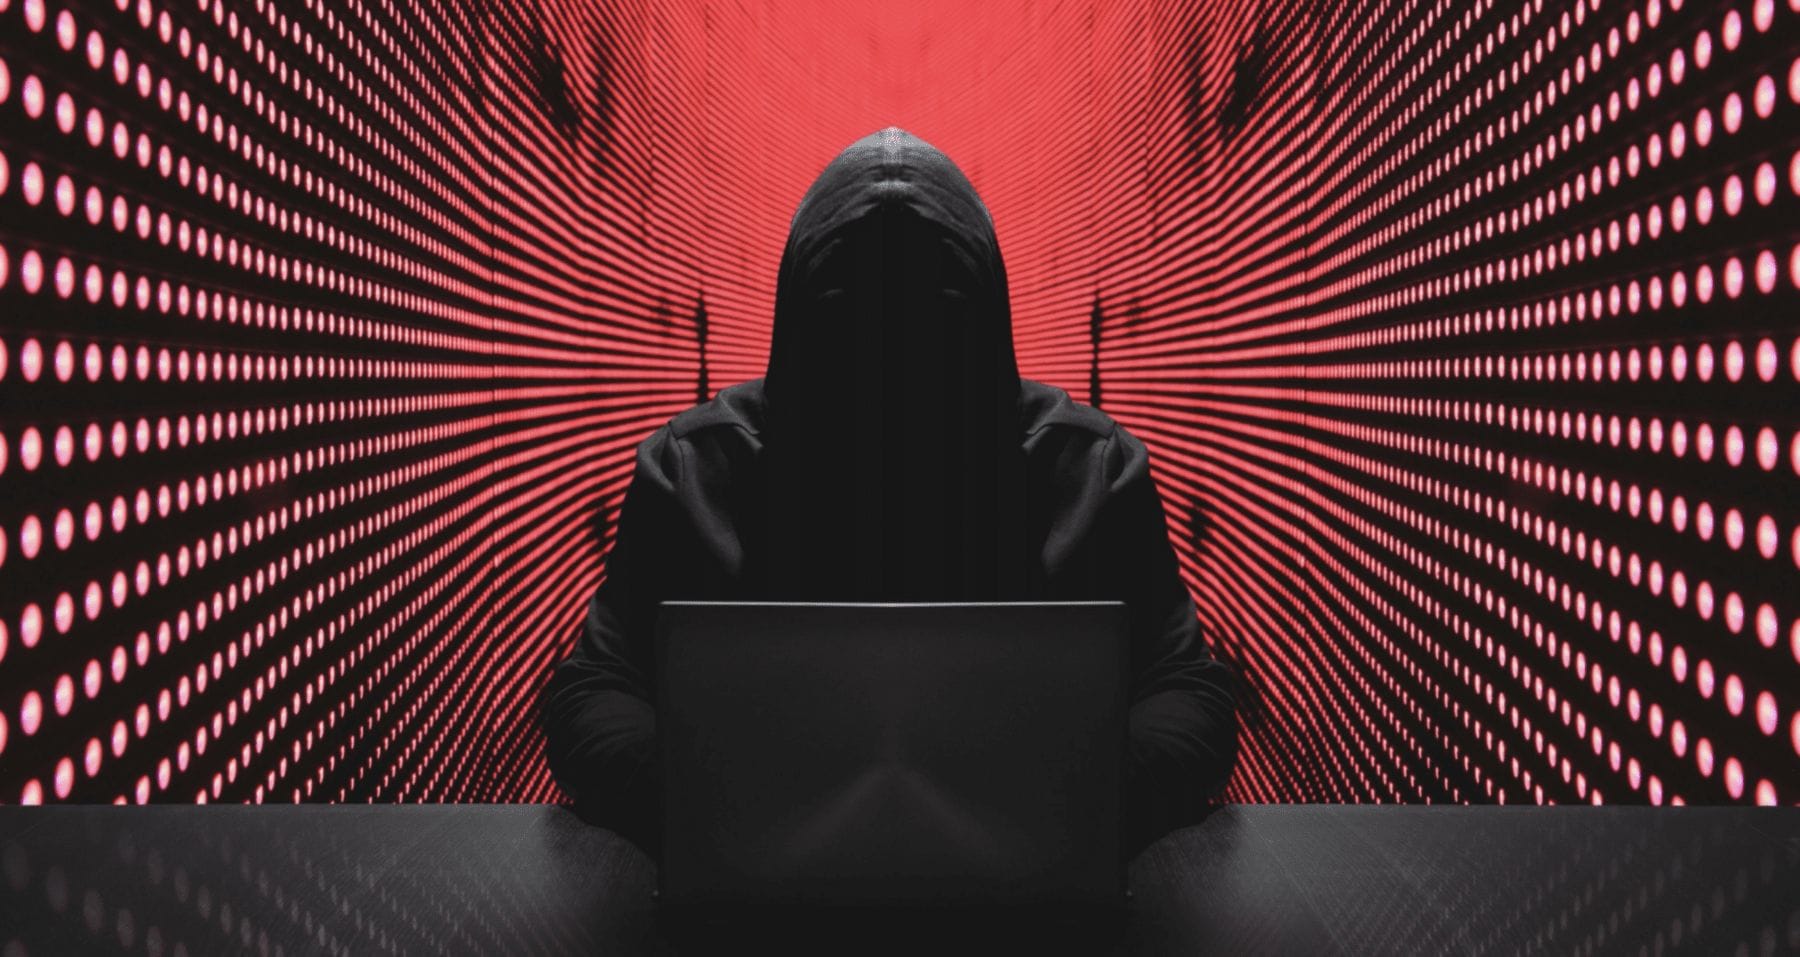 Cybersecurity threats in an uncertain world